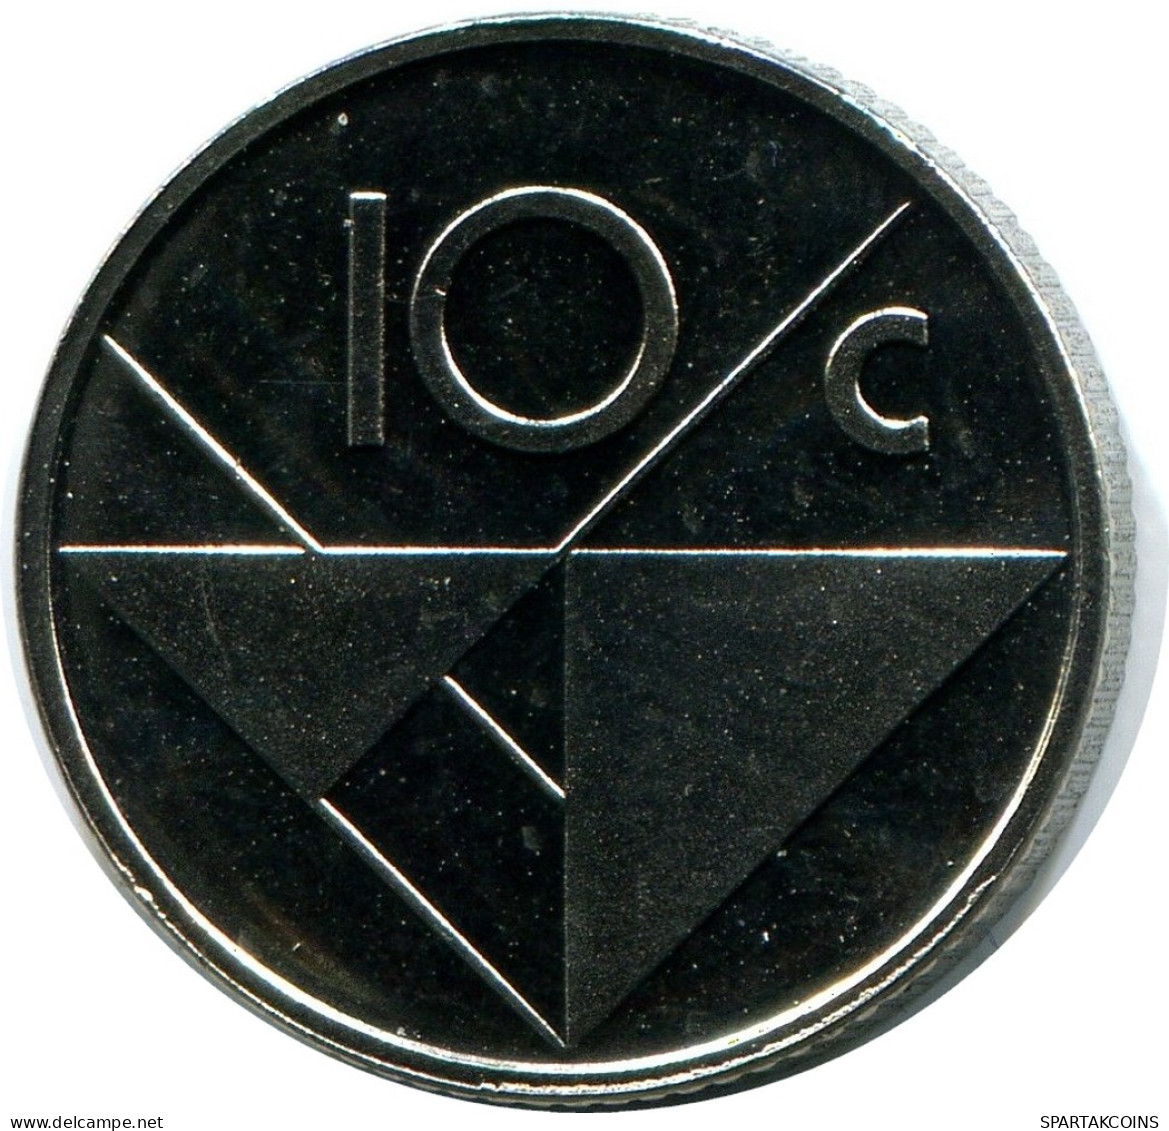 10 CENTS 1991 ARUBA Coin (From BU Mint Set) #AH077.U - Aruba